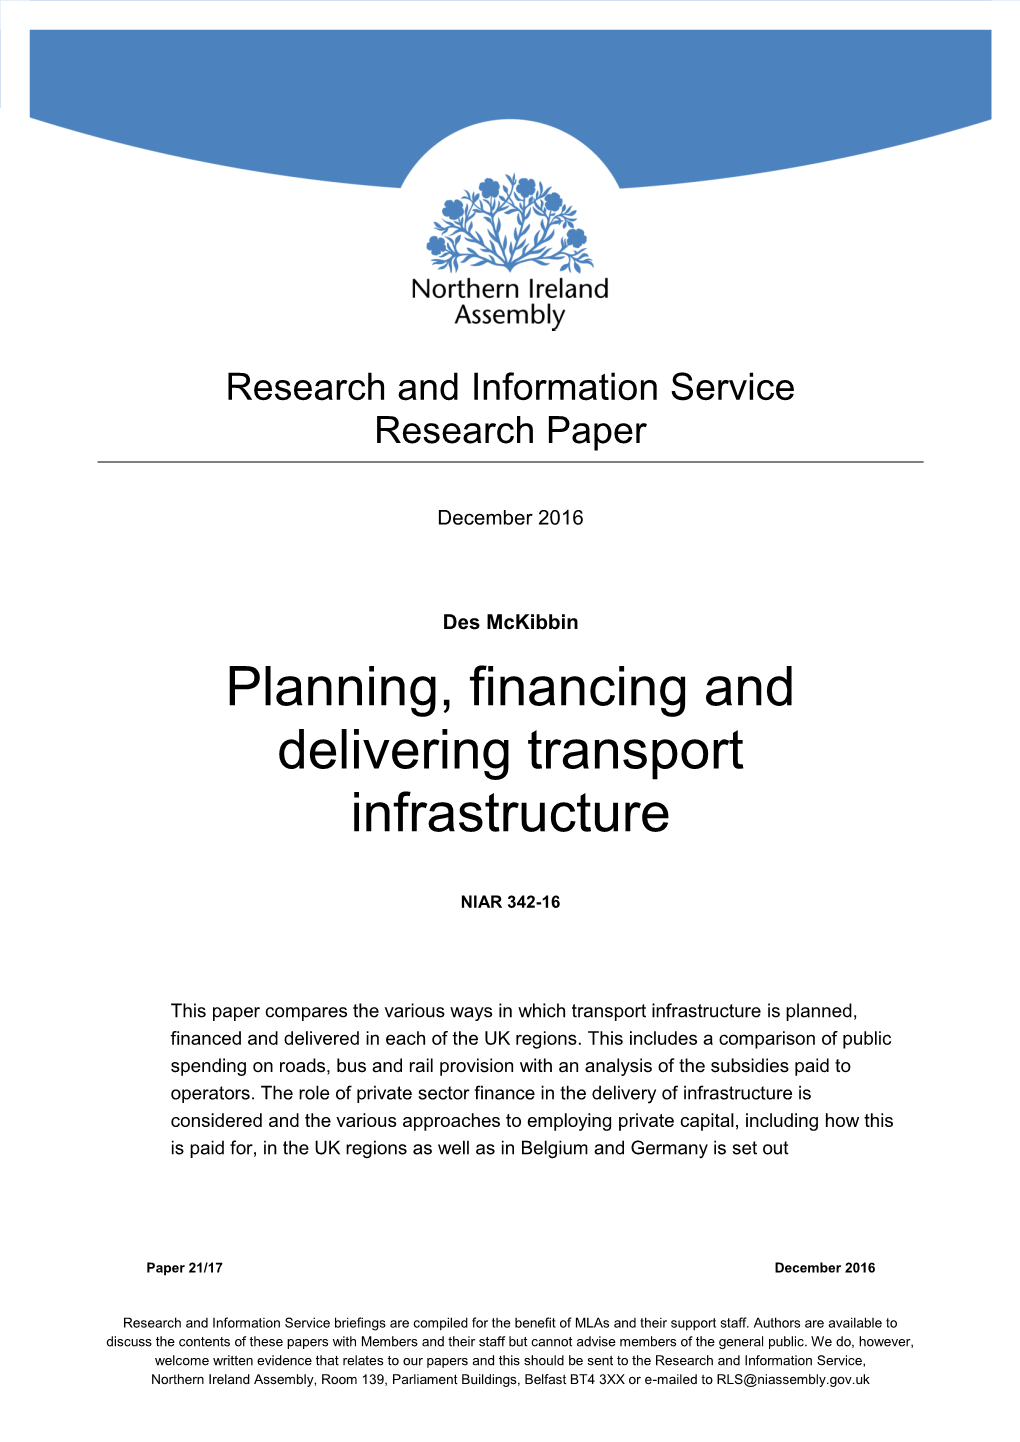 Planning, Financing and Delivering Transport Infrastructure